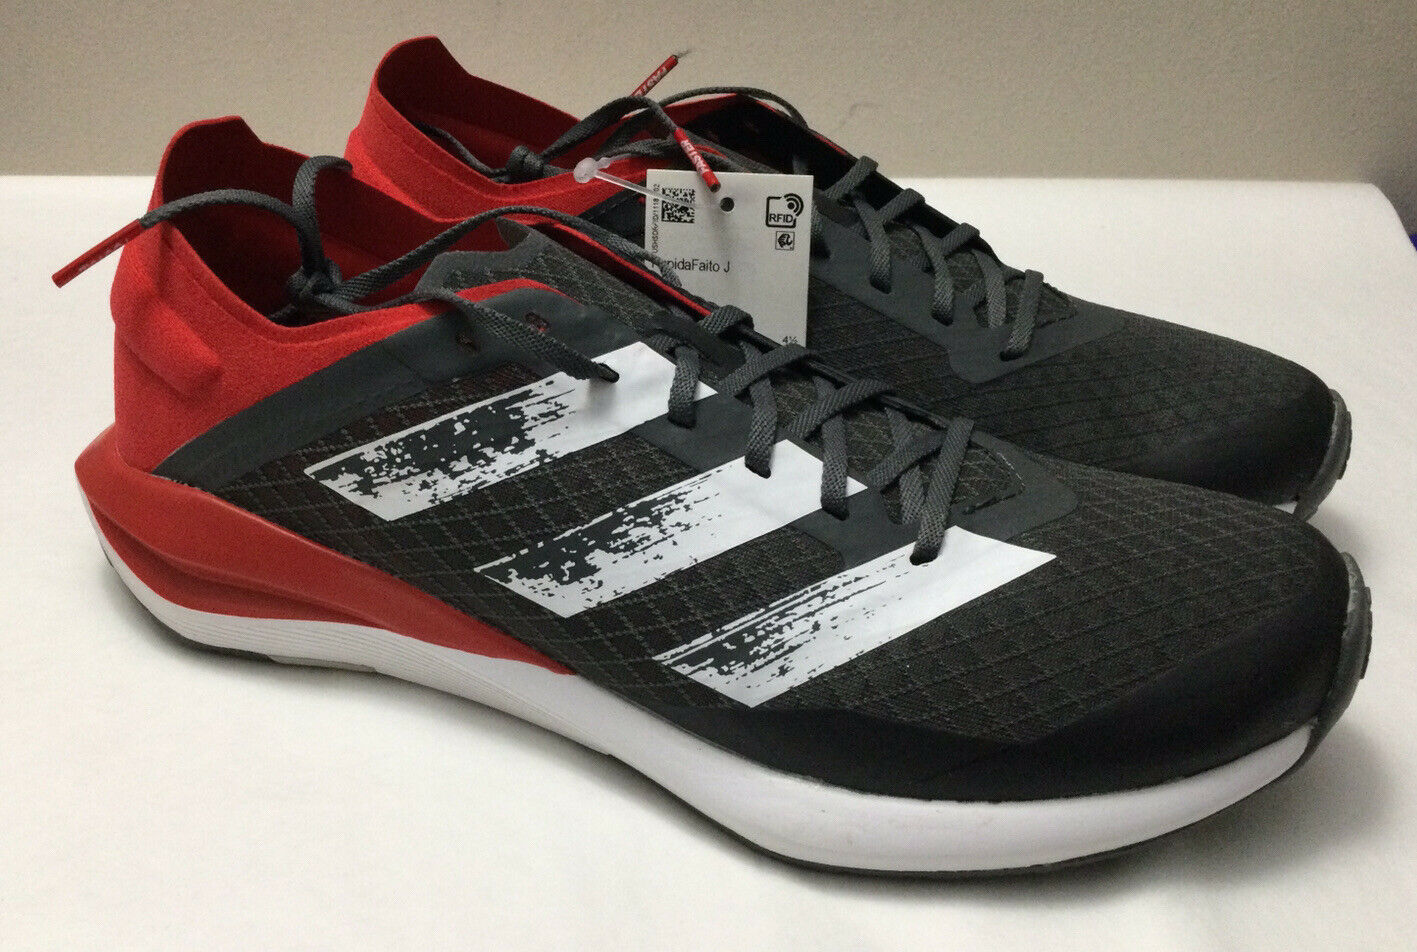 New ADIDAS Rapida Faito J Sneakers Running Athletic Shoes Sz Boys 5